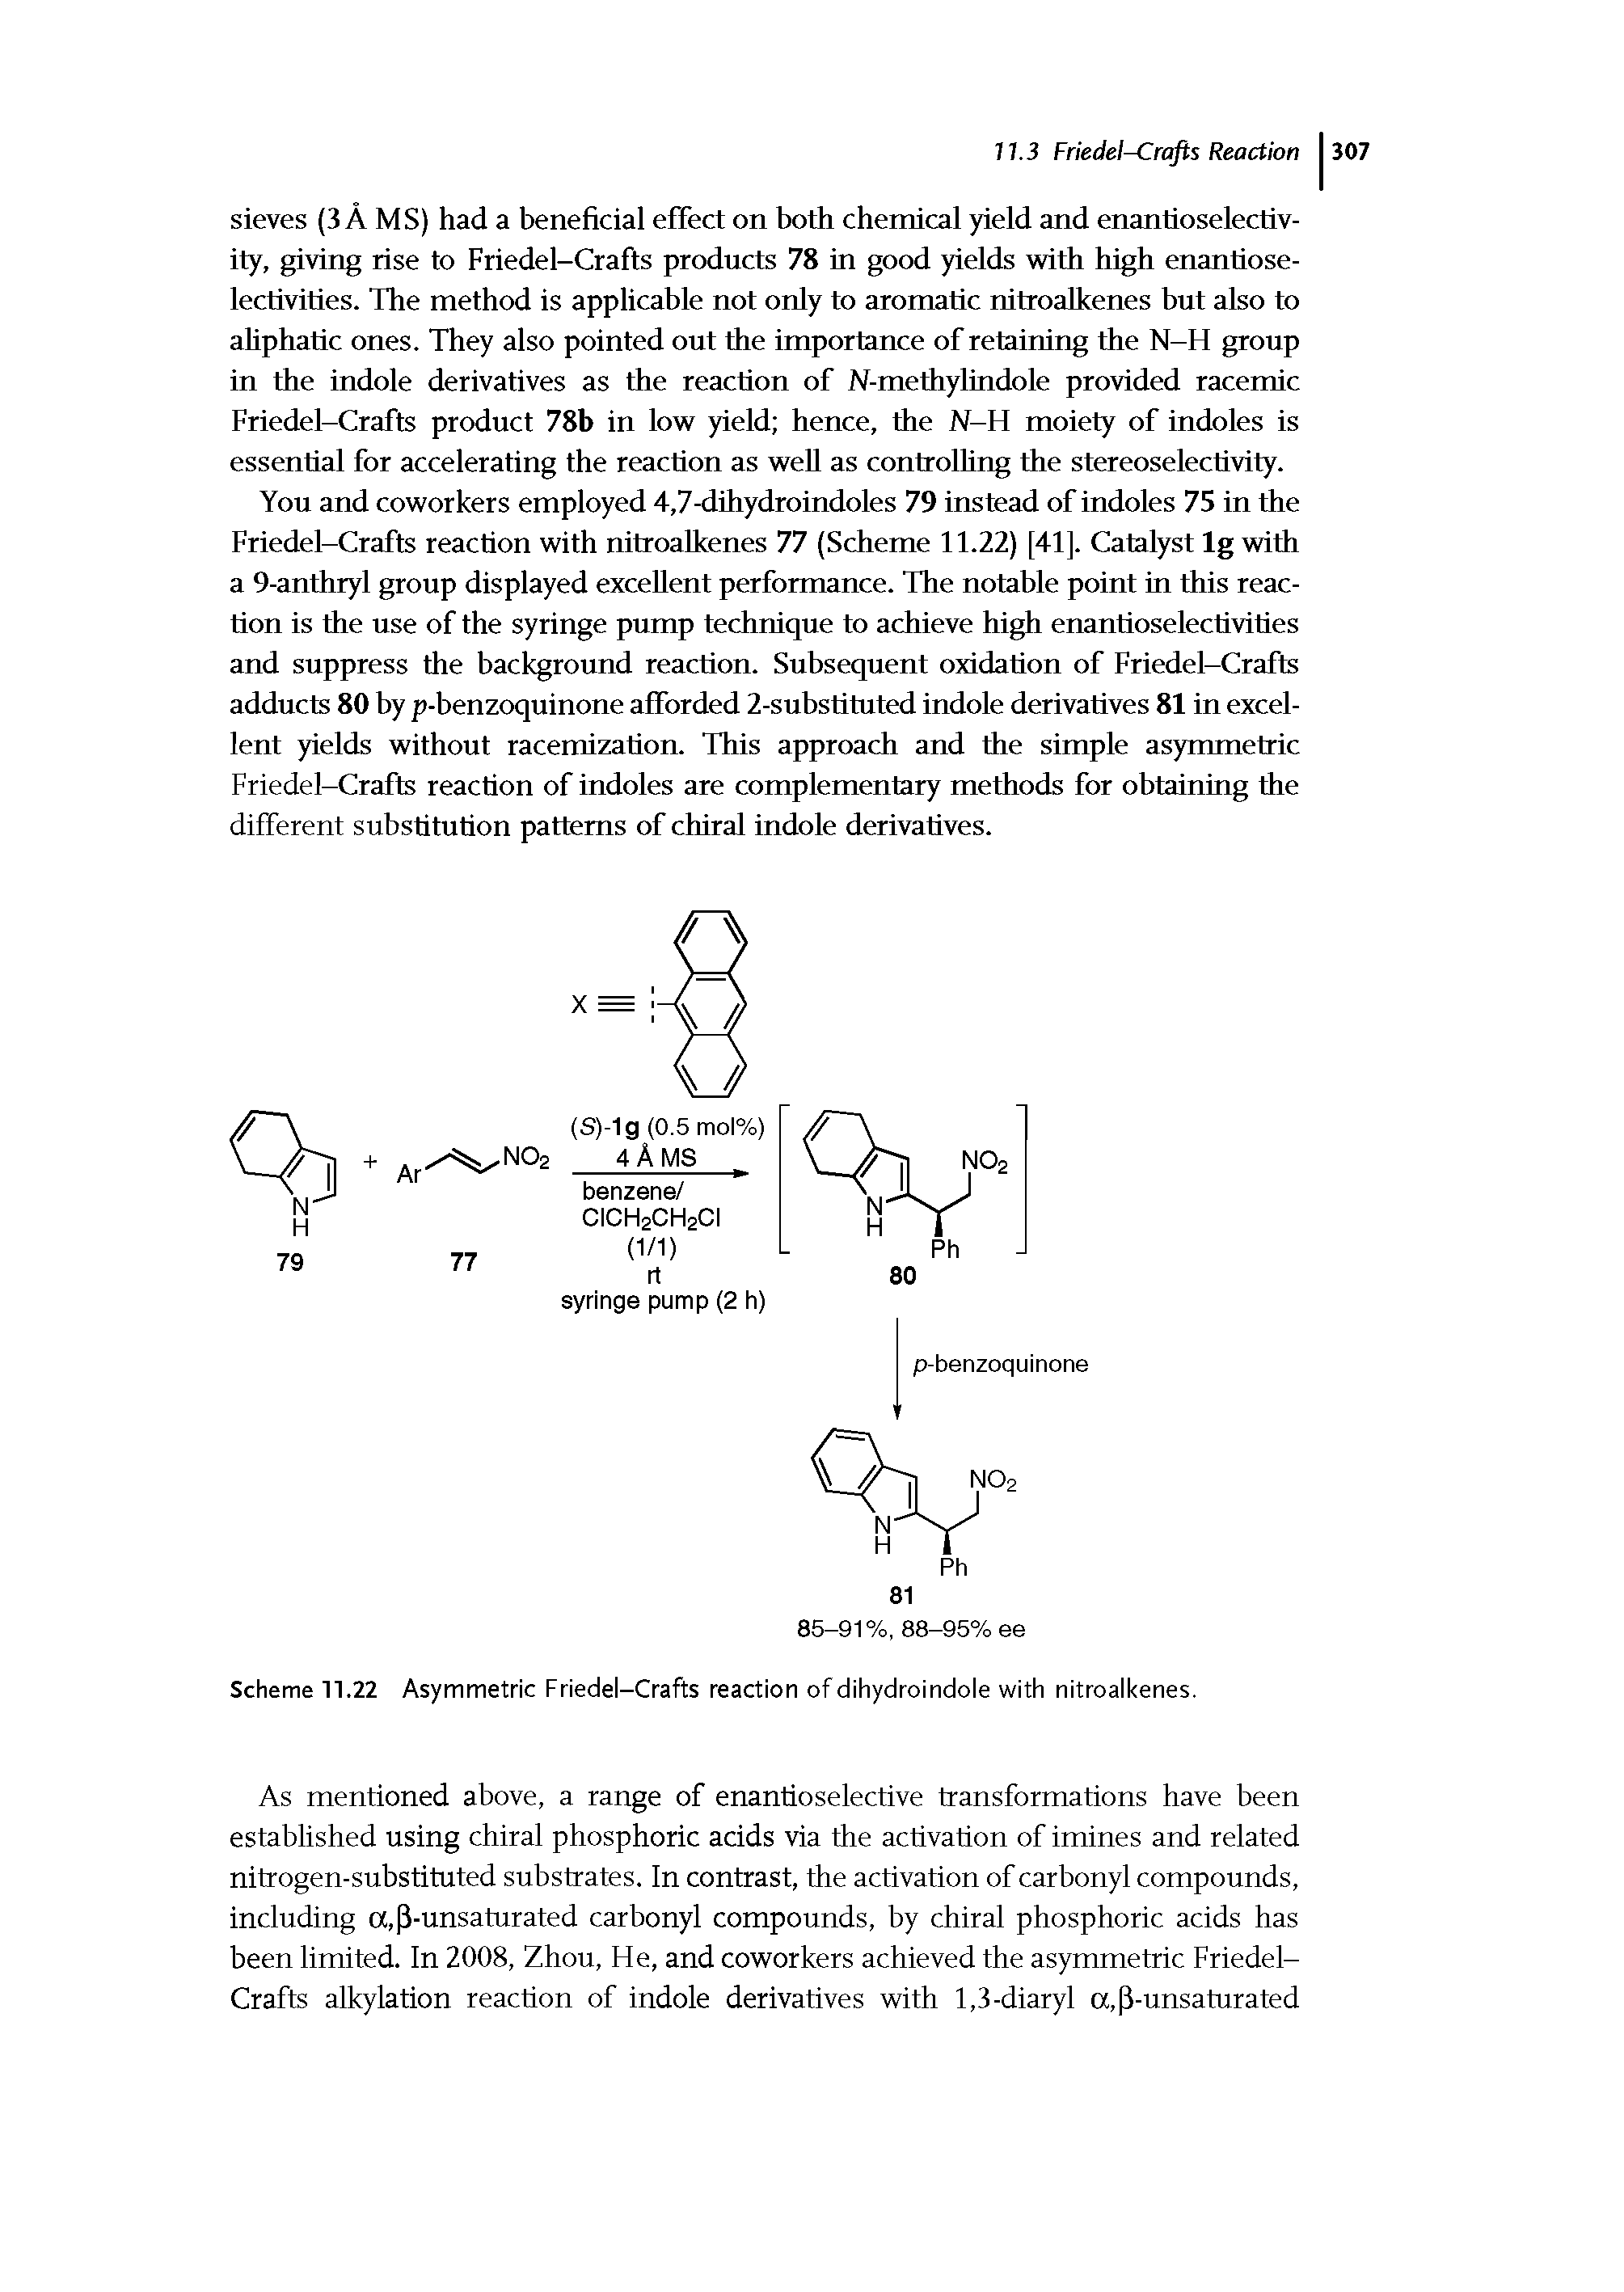 Scheme 11.22 Asymmetric Friedel-Crafts reaction of dihydroindole with nitroalkenes.